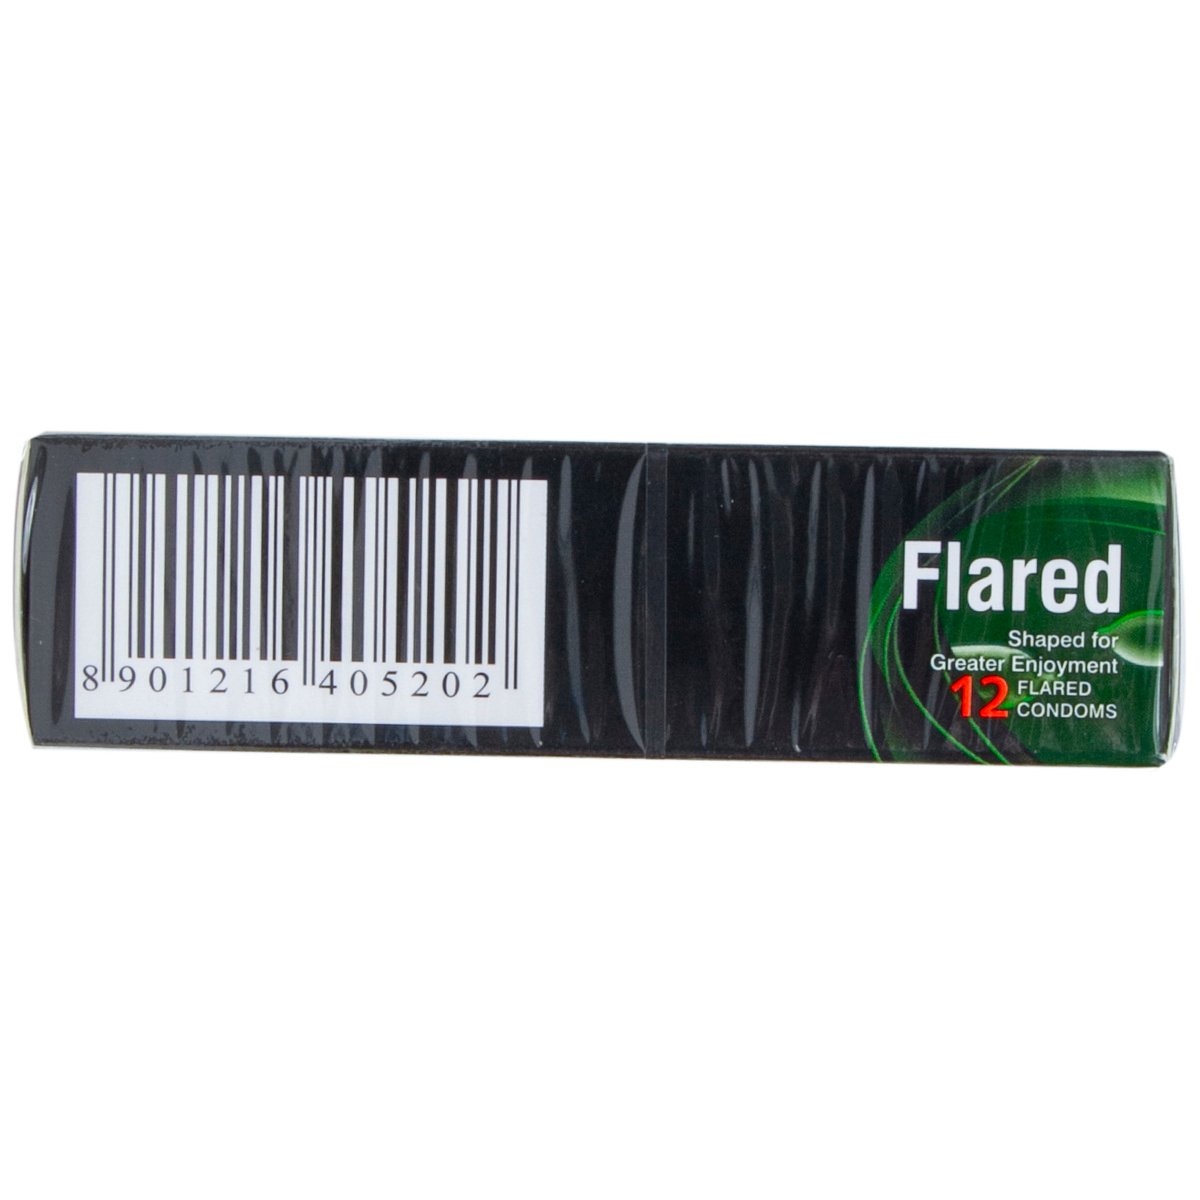 Kamasutra Flared Condoms 12 pcs